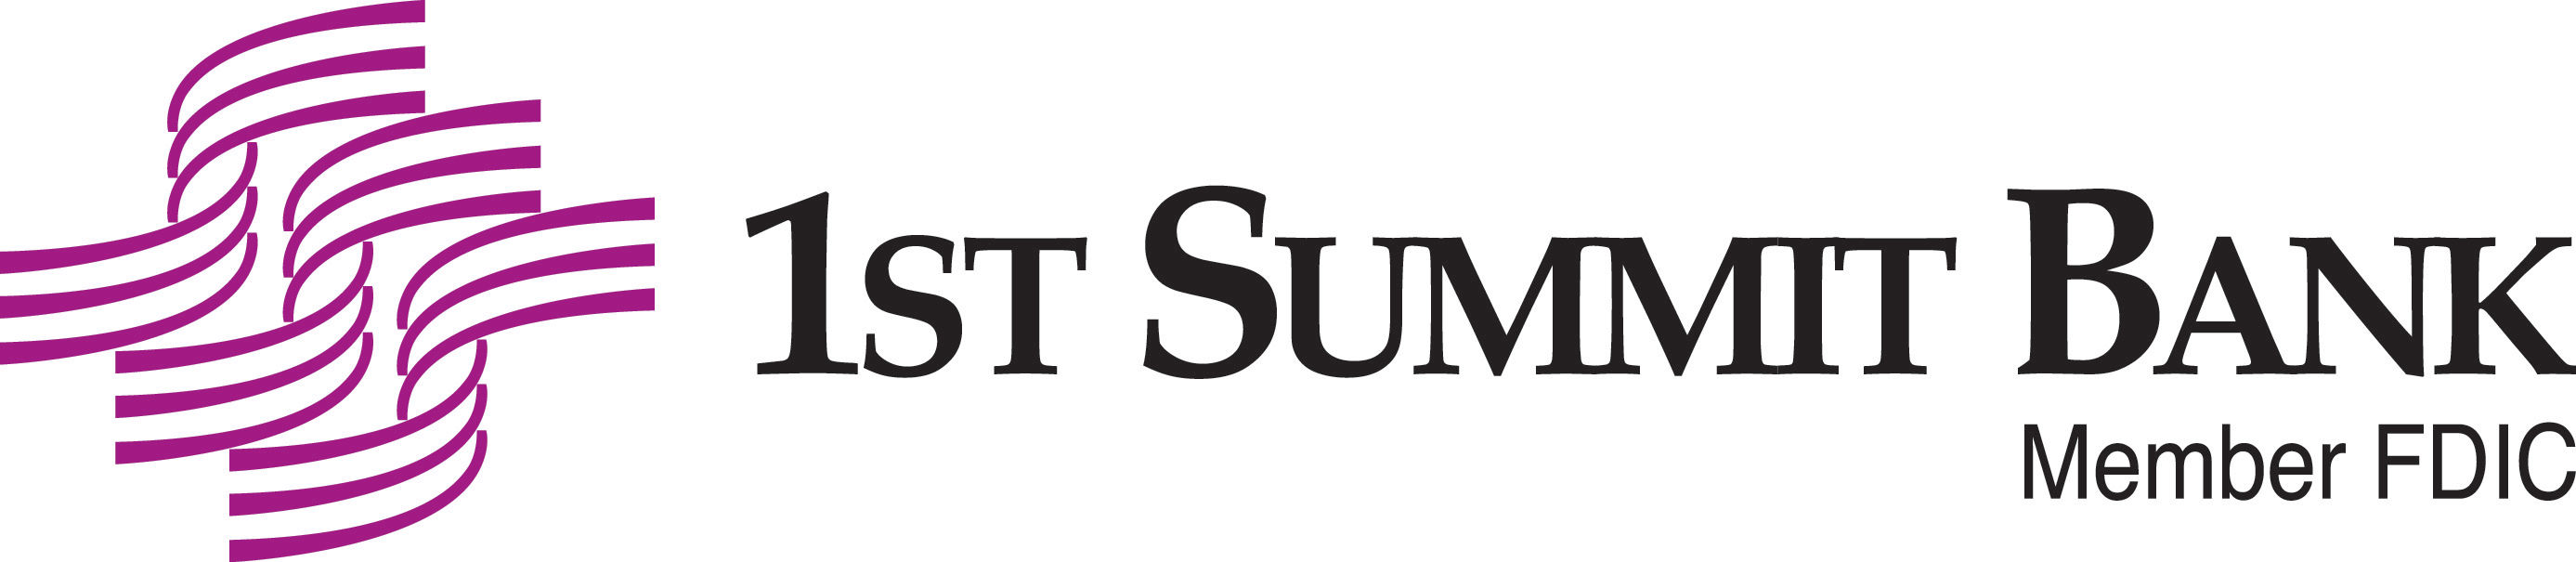 1ST SUMMIT BANK FDIC logo